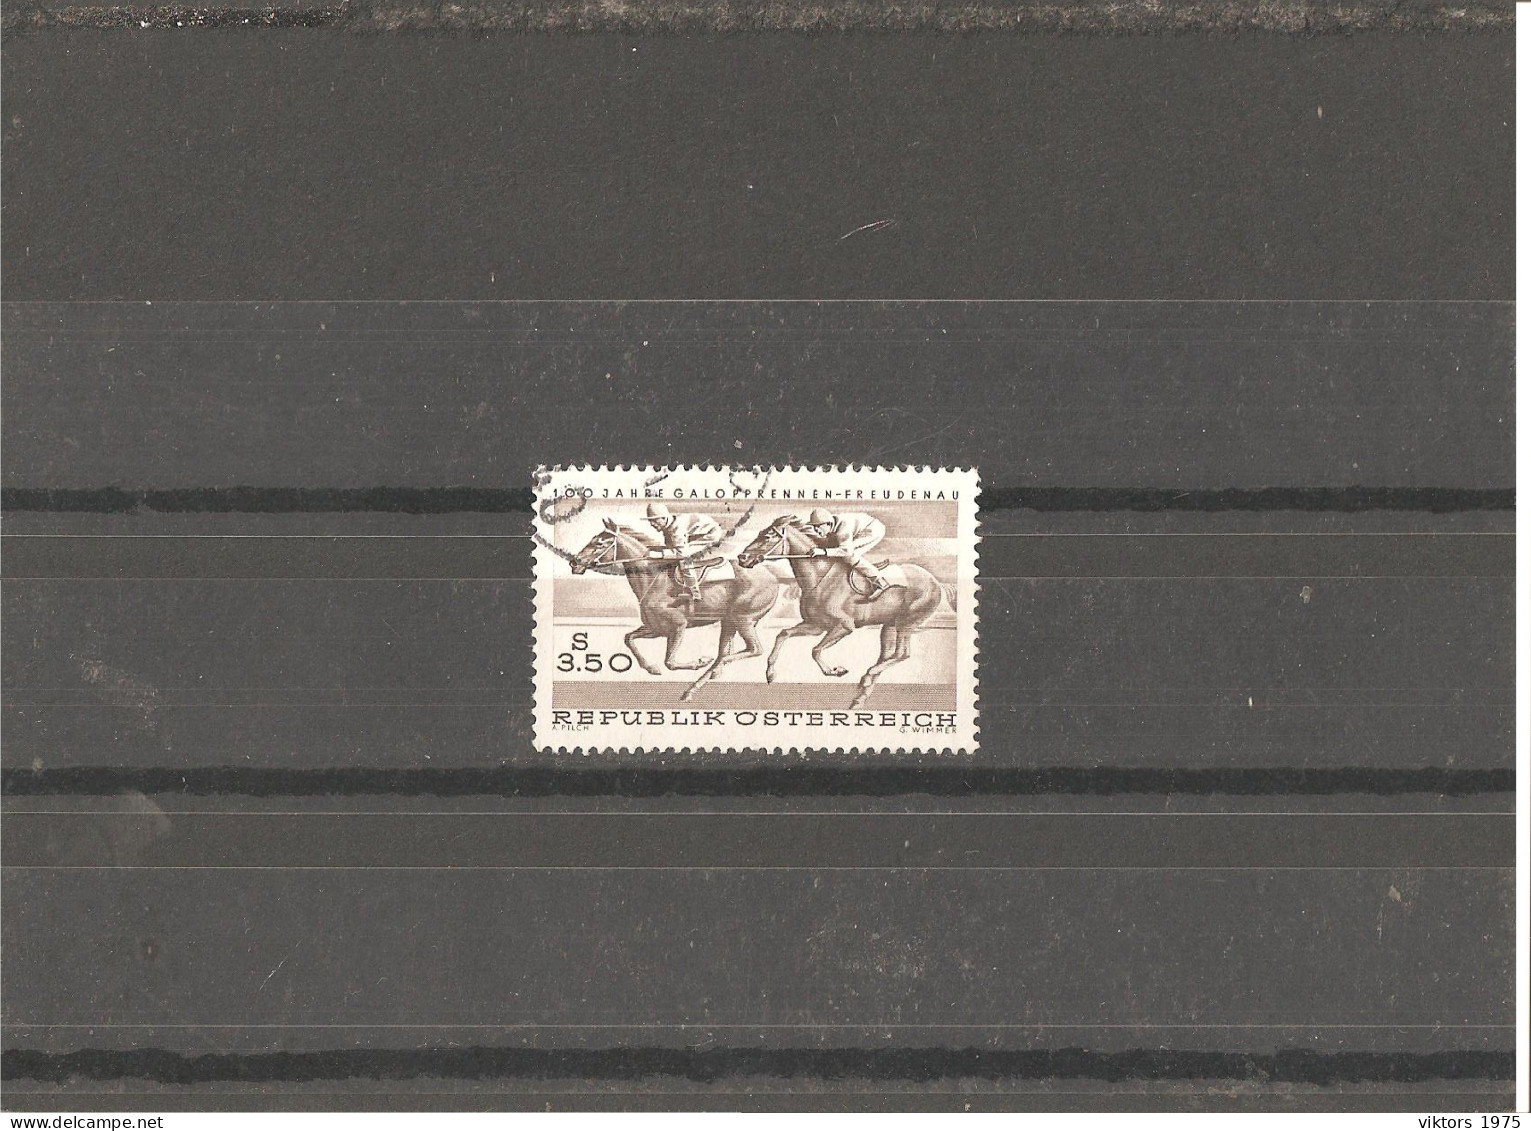 Used Stamp Nr.1265 In MICHEL Catalog - Gebraucht